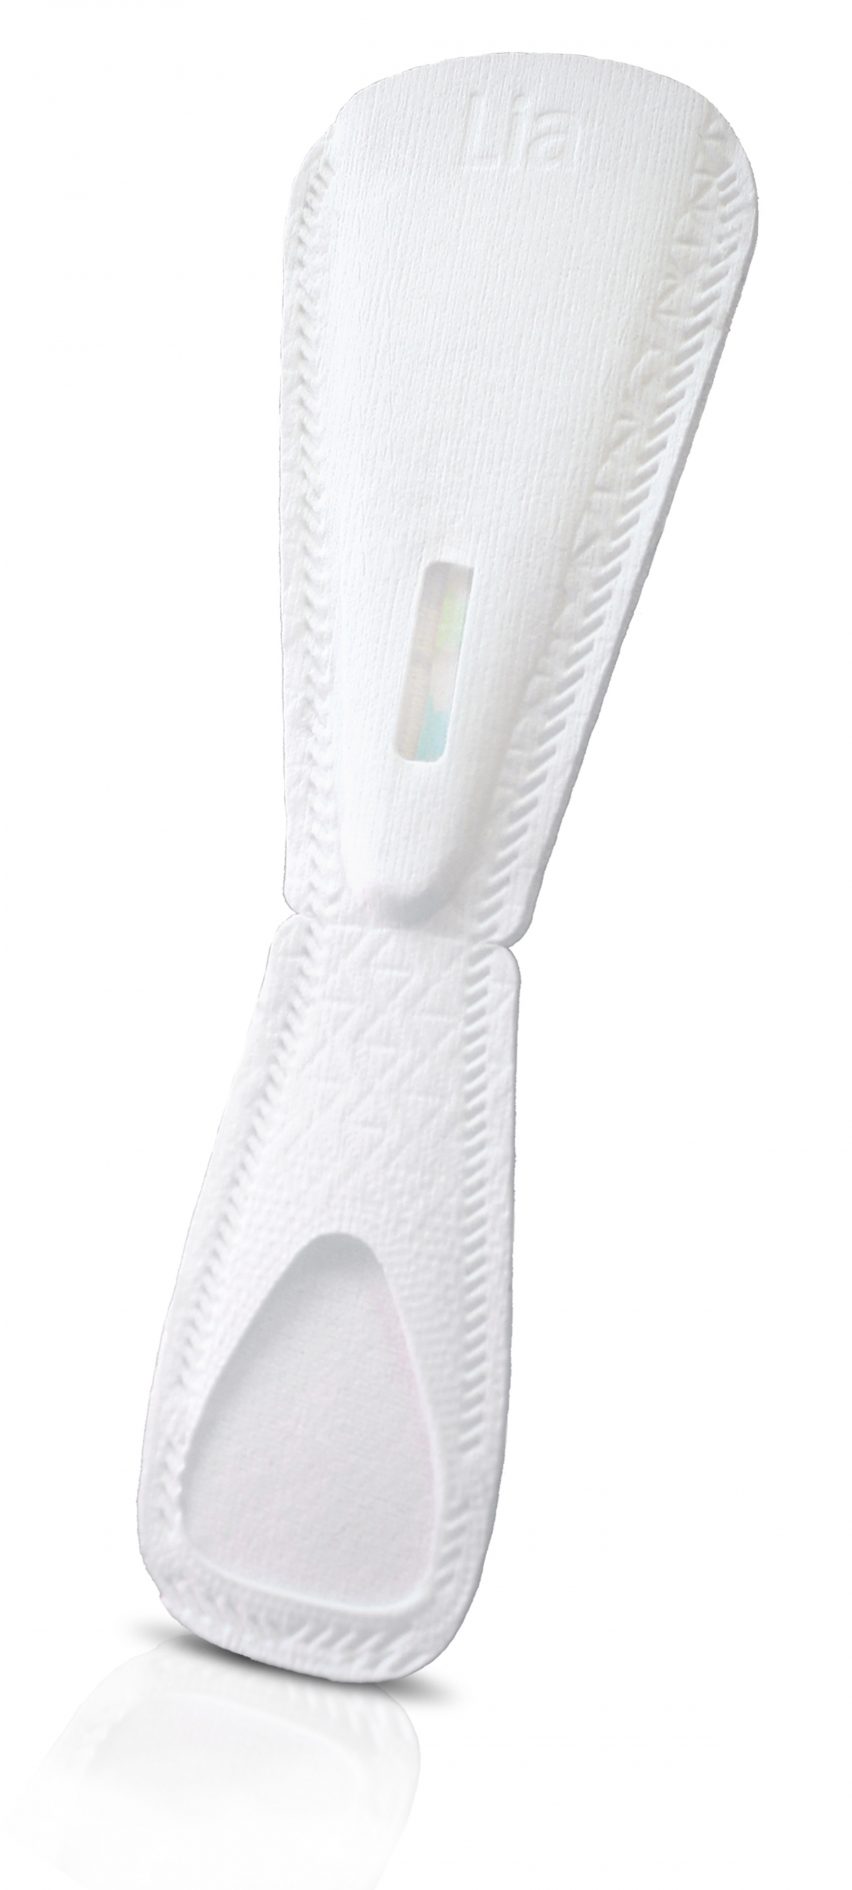 Lia flushable pregnancy test kit